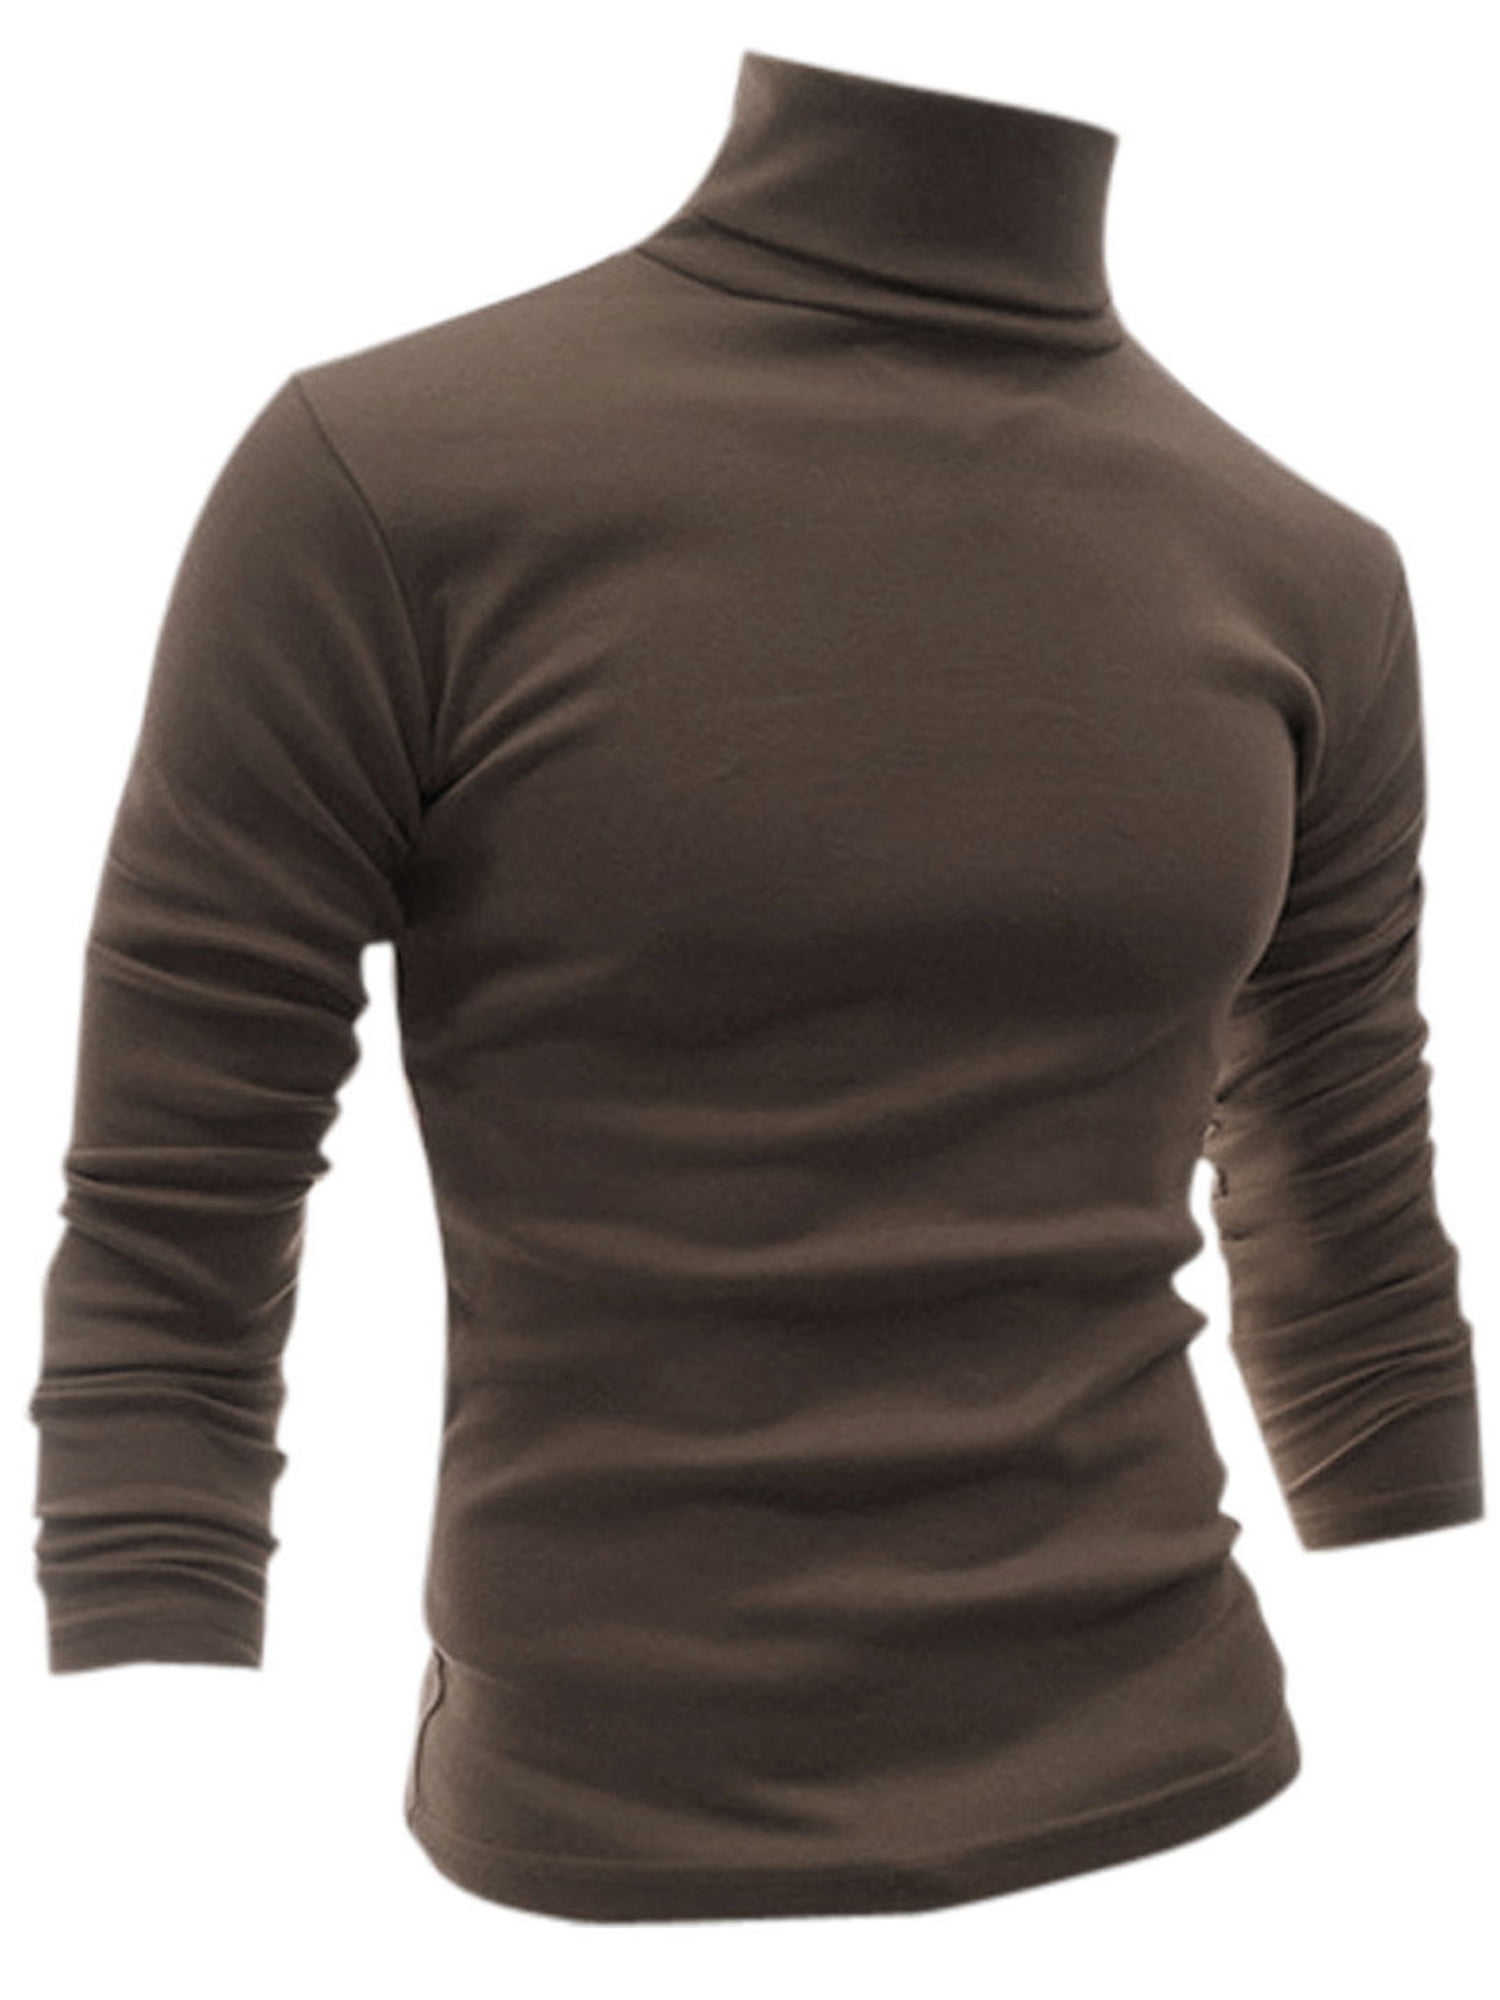 Unique Bargains - Men's Slim Fit Lightweight Long Sleeve Pullover Top ...